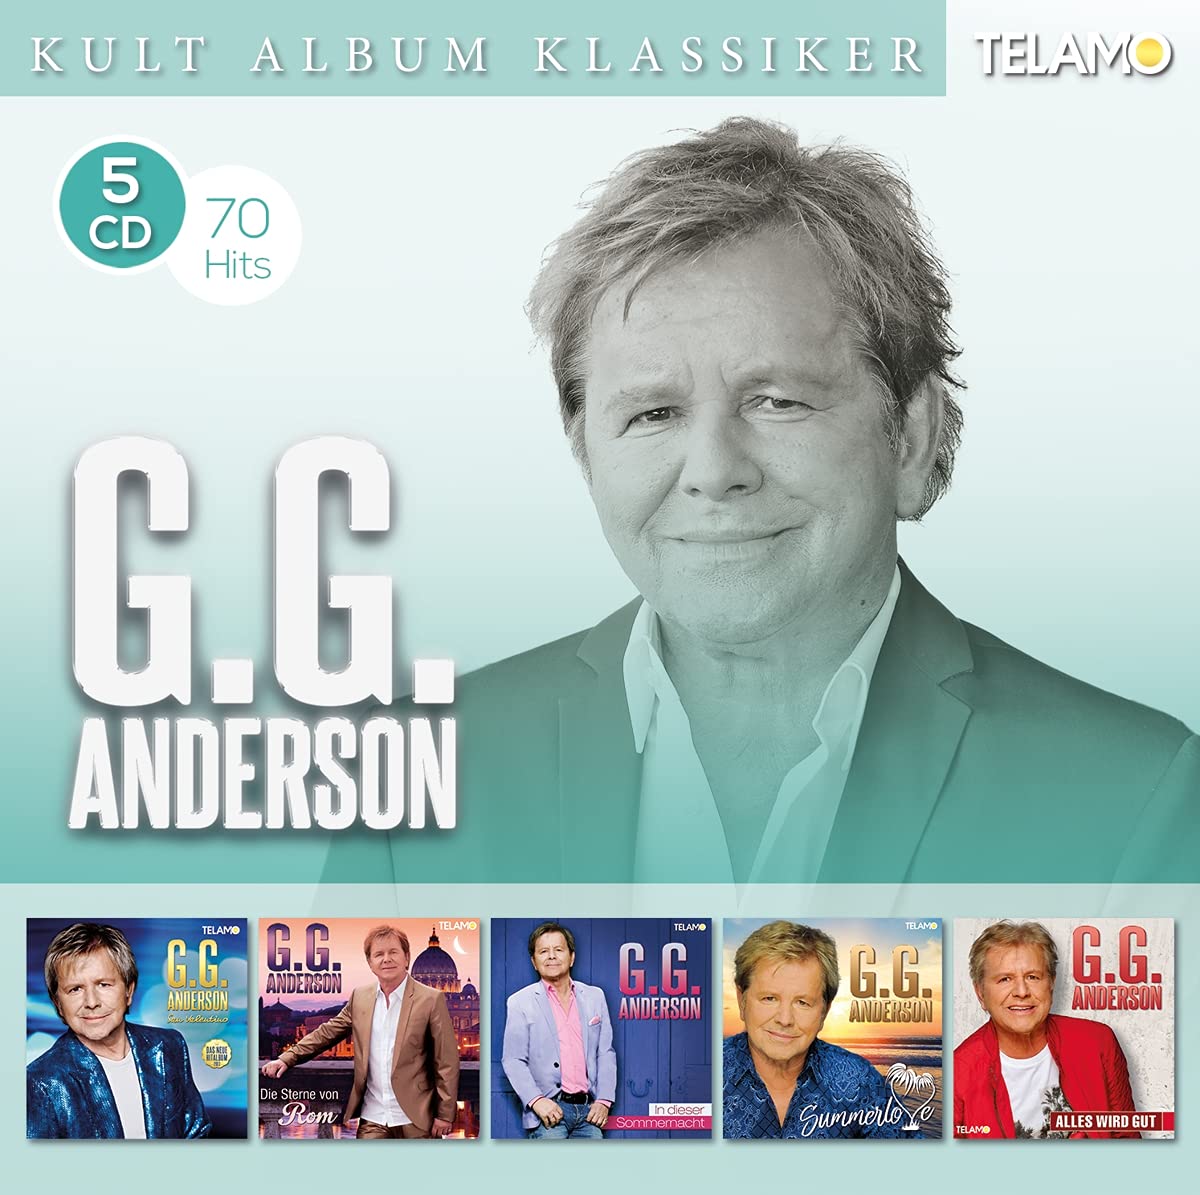 G.G. Anderson - Kult Album Klassiker (2021)